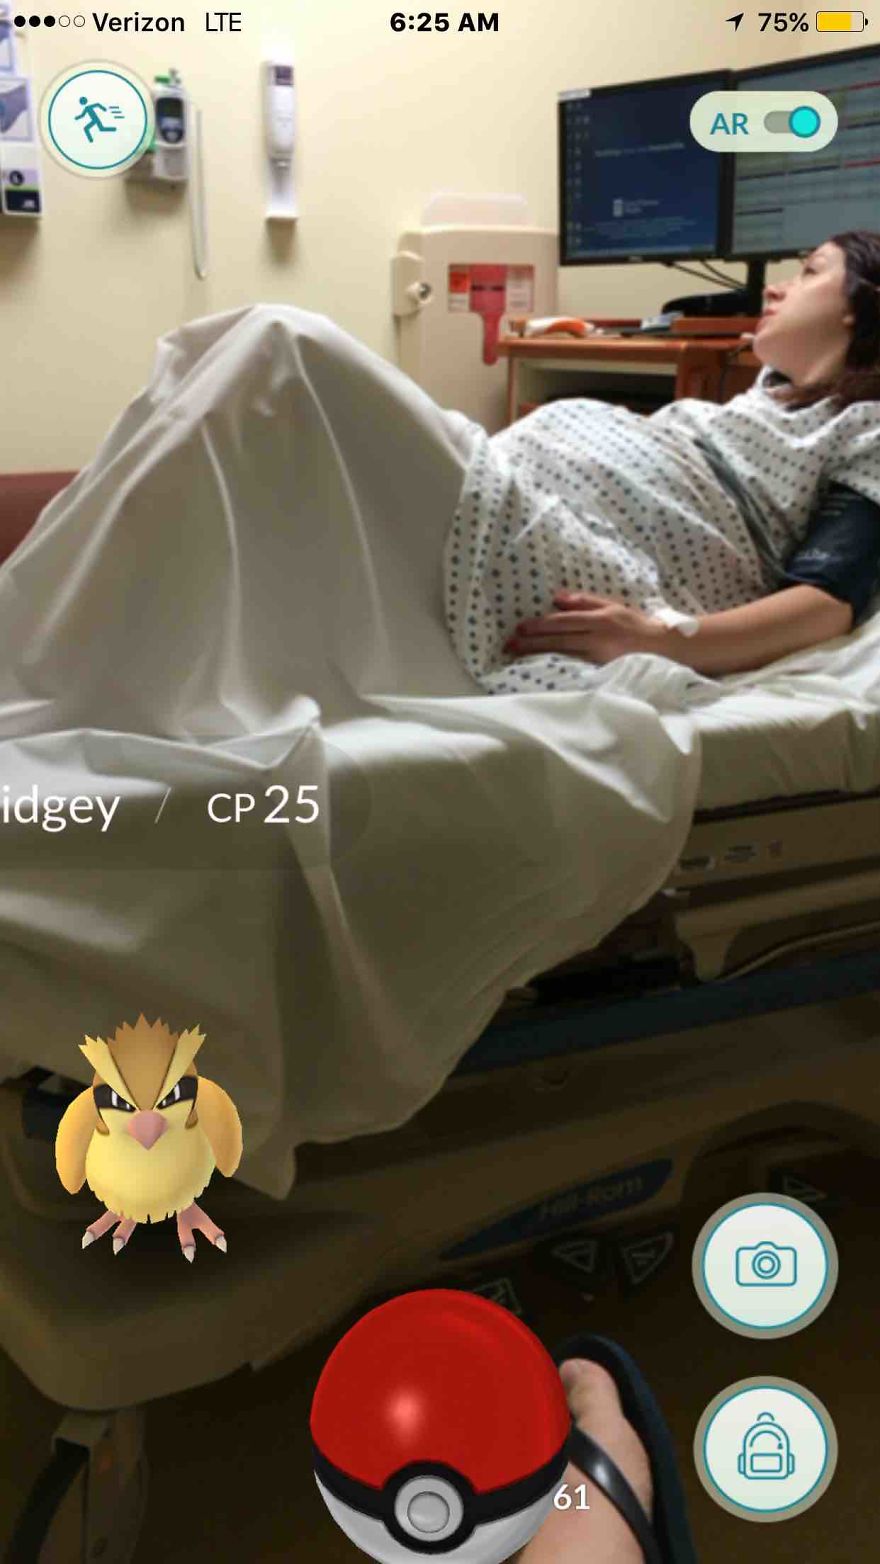 22 Crazy Pokemon Go Photos That Truly Depict The Pokemon Go Frenzy